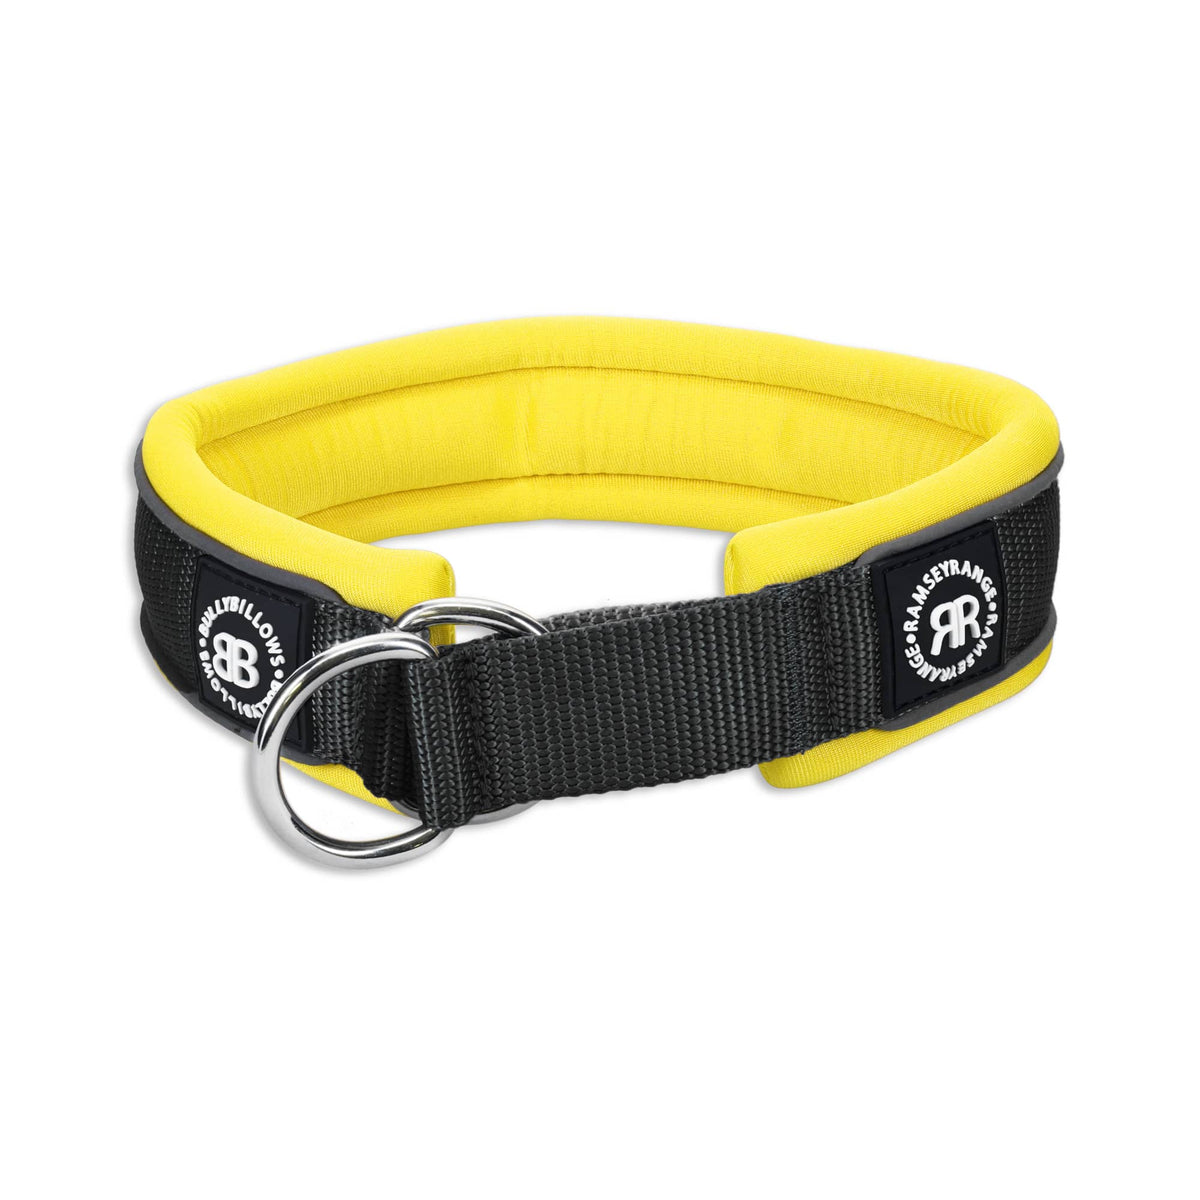 4cm Slip on Collar | Soft Padded & Reflective - Black & Yellow v2.0 ...